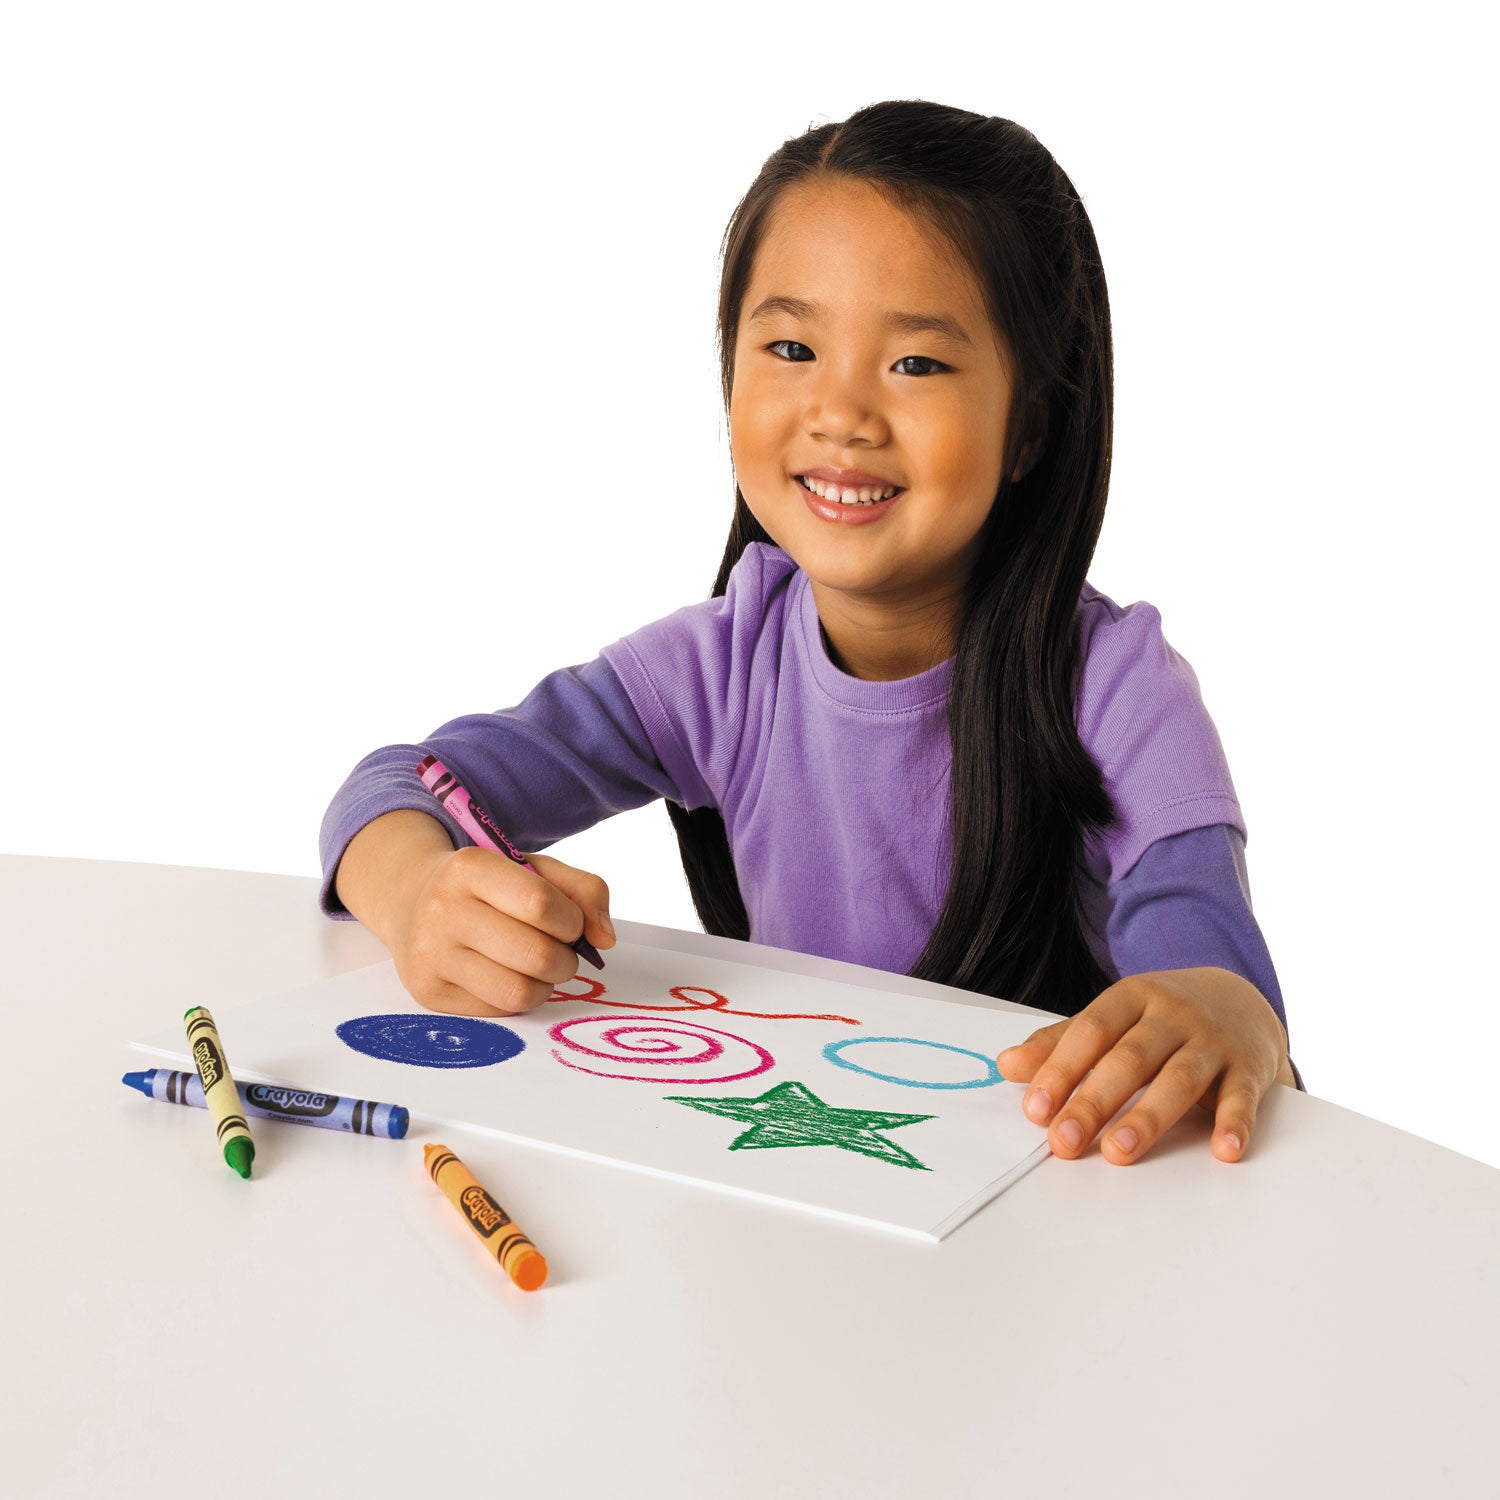 Classpack Regular Crayons, 16 Colors, 800/Box - 